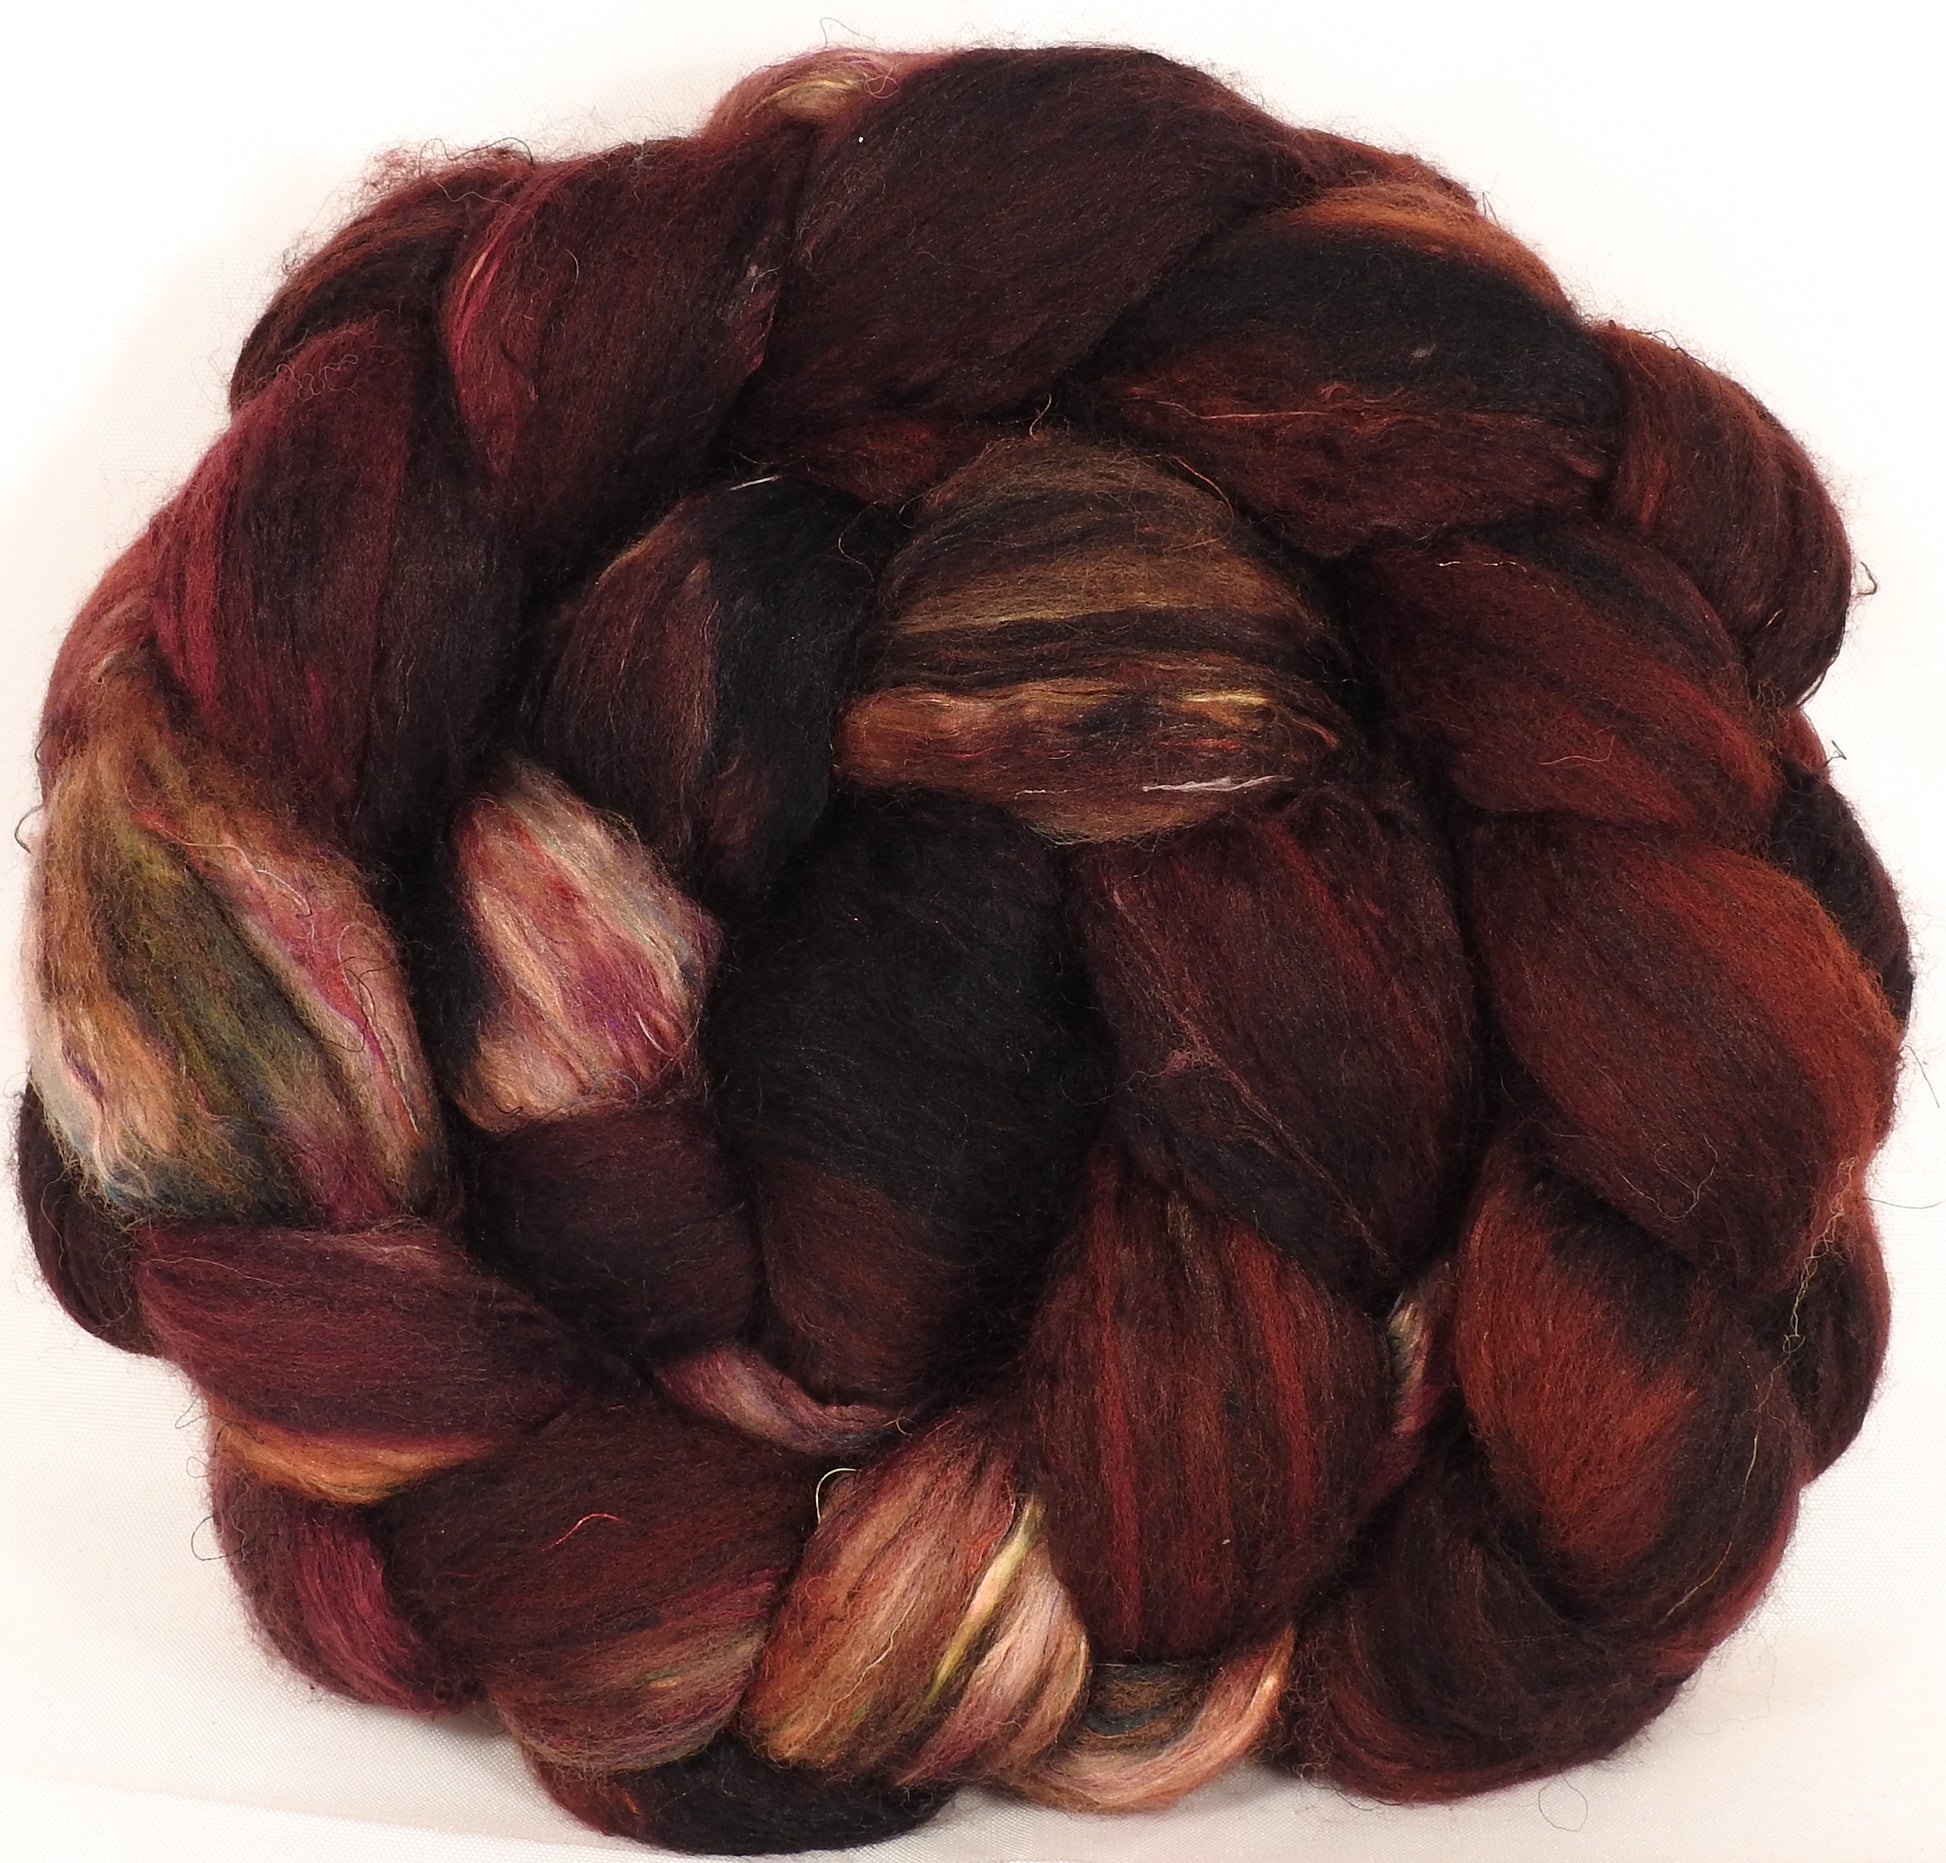 Batt in a Braid #39-SARI- 17 -(4.6 oz.)Falkland Merino/ Mulberry Silk / Sari Silk (50/25/25) - Inglenook Fibers